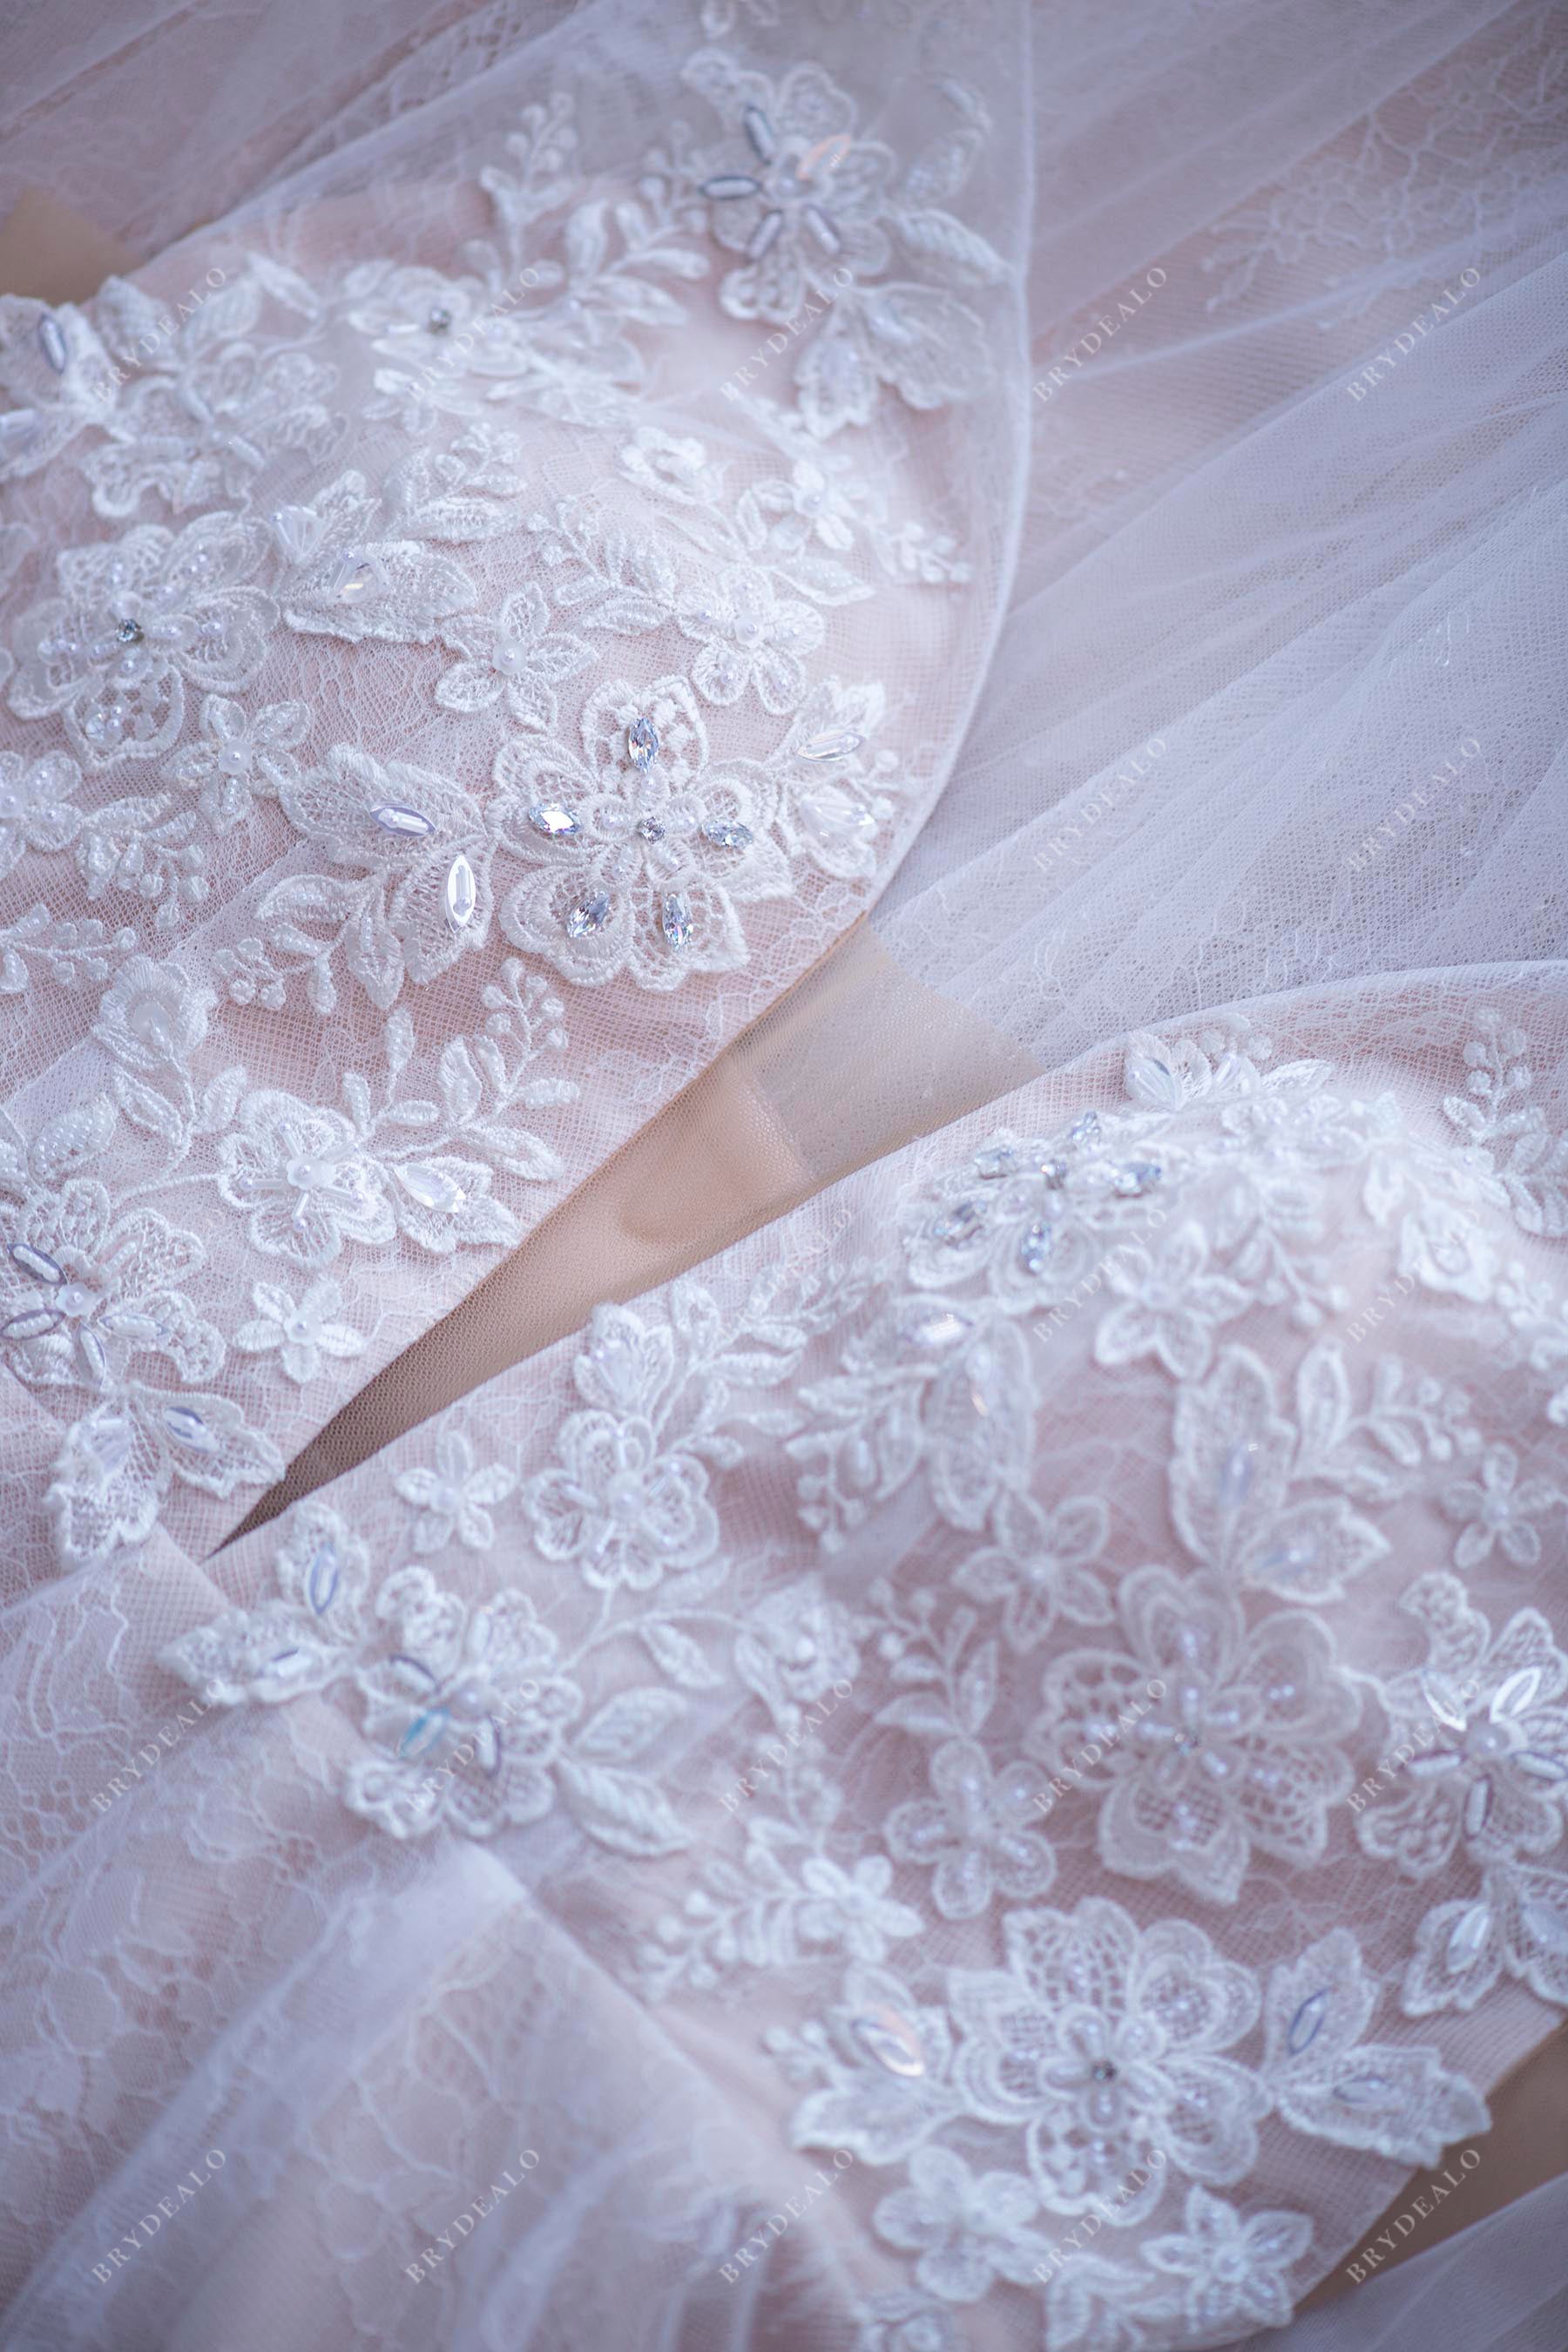 plunging neck lace bridal dress